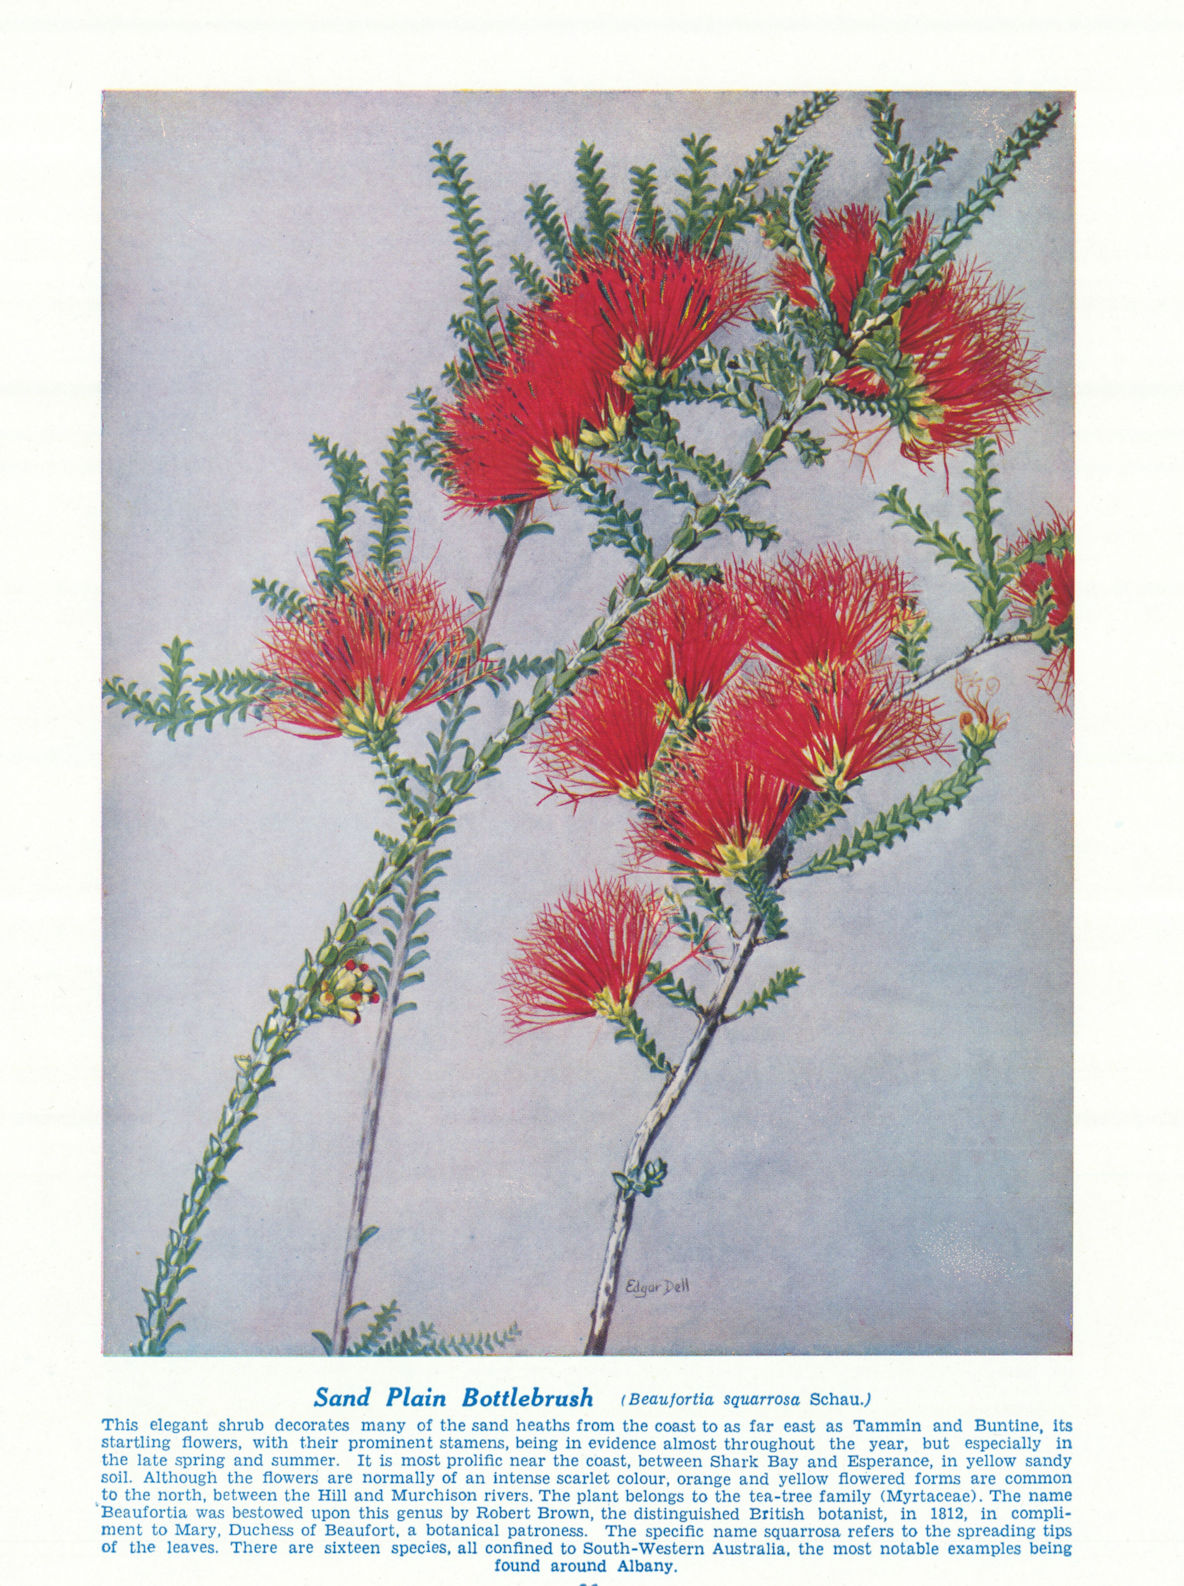 Sand Plain Bottlebrush (Beaufortia squarrosa). West Australian Wild Flowers 1950